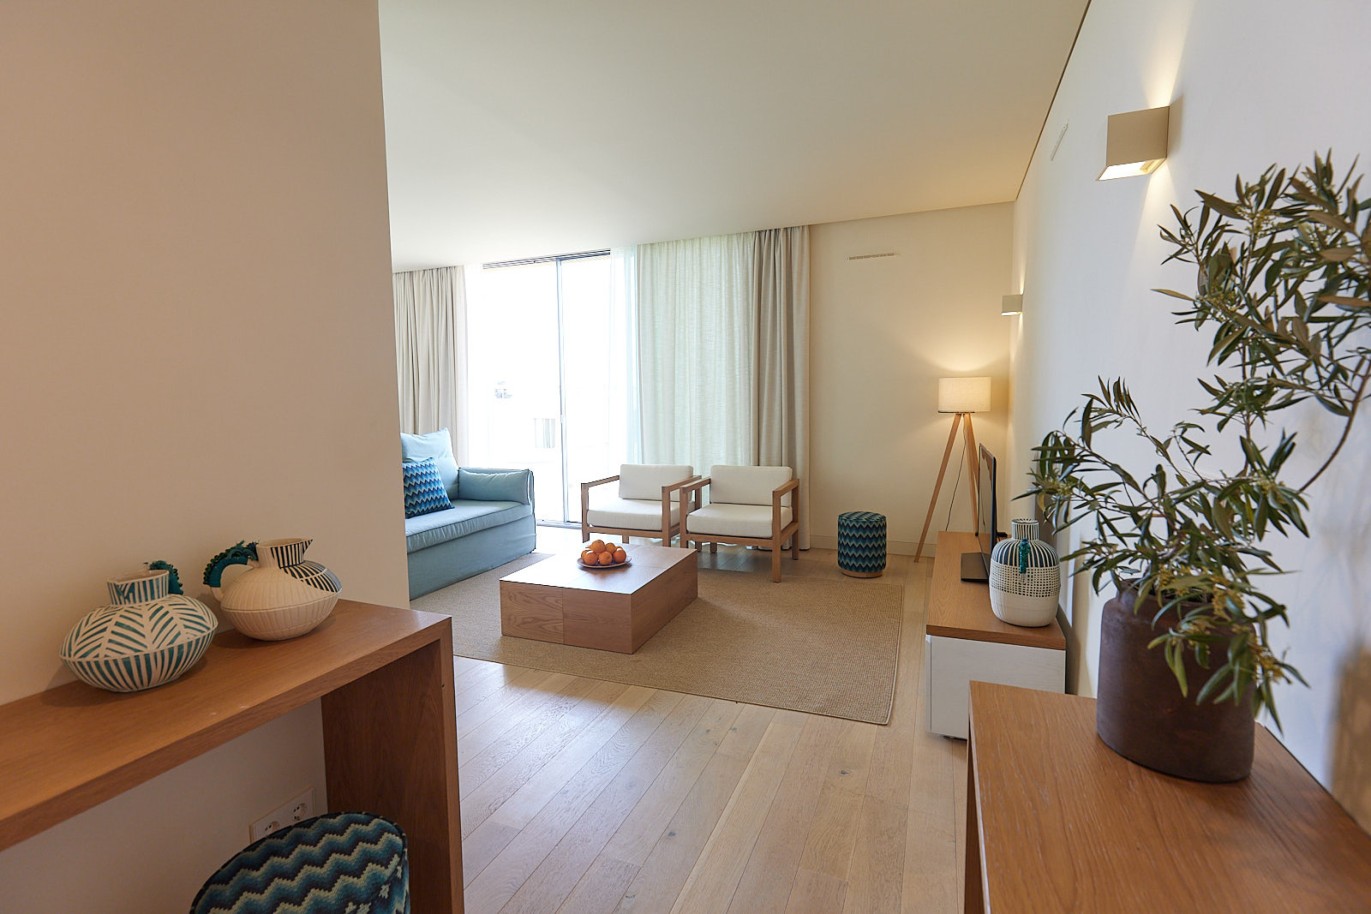 2 bedroom apartment in resort, for sale in Porches, Algarve_229079